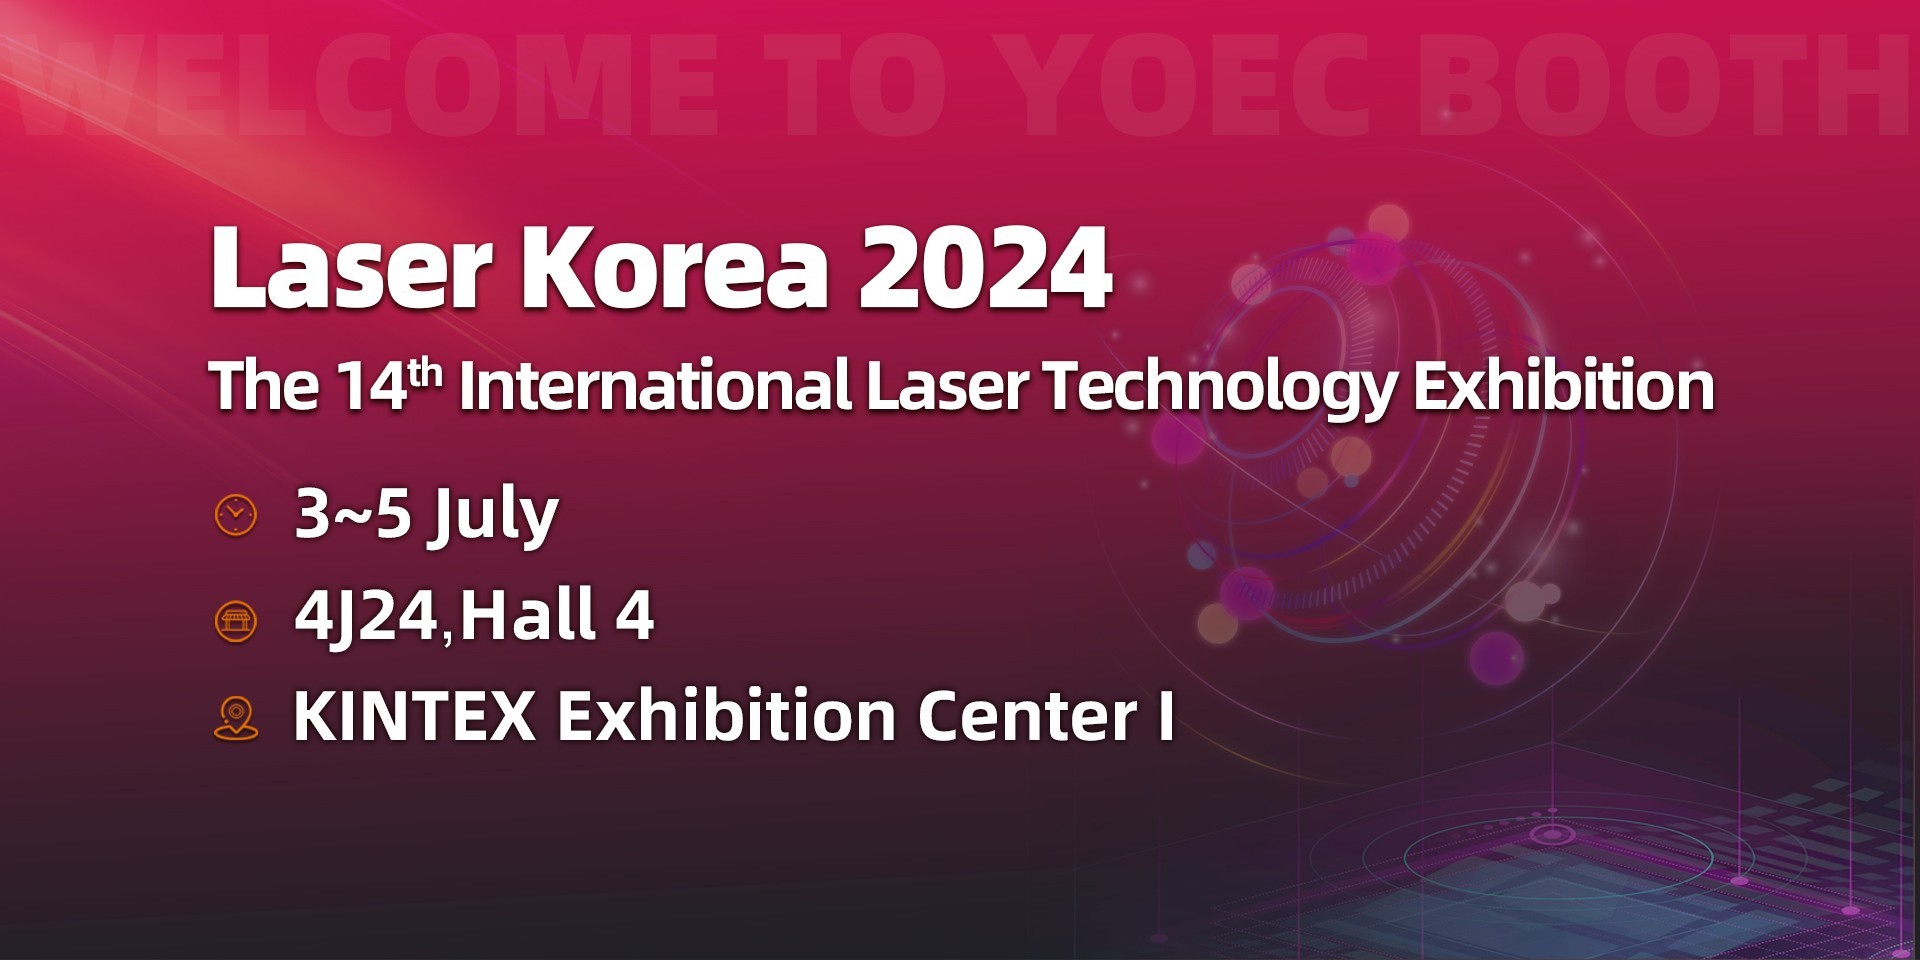 Join YOEC at Laser Korea 2024 